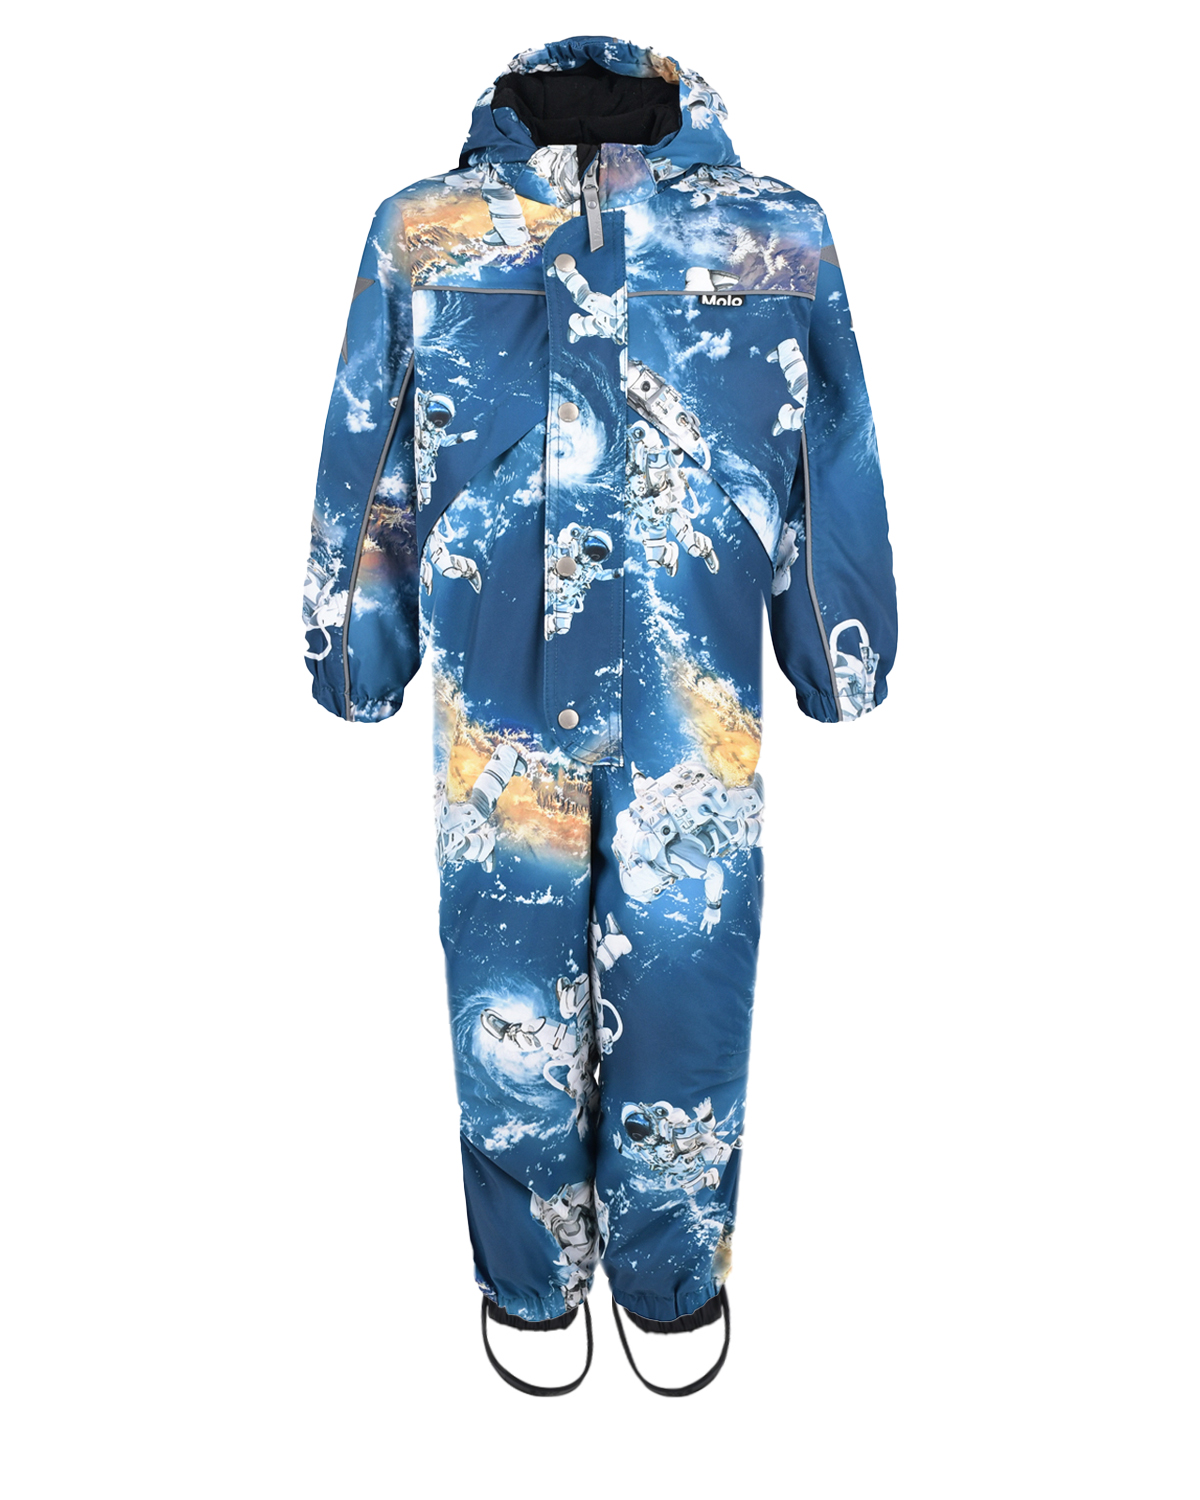 Комбинезон Polaris Astronauts Molo детский, размер 122, цвет синий